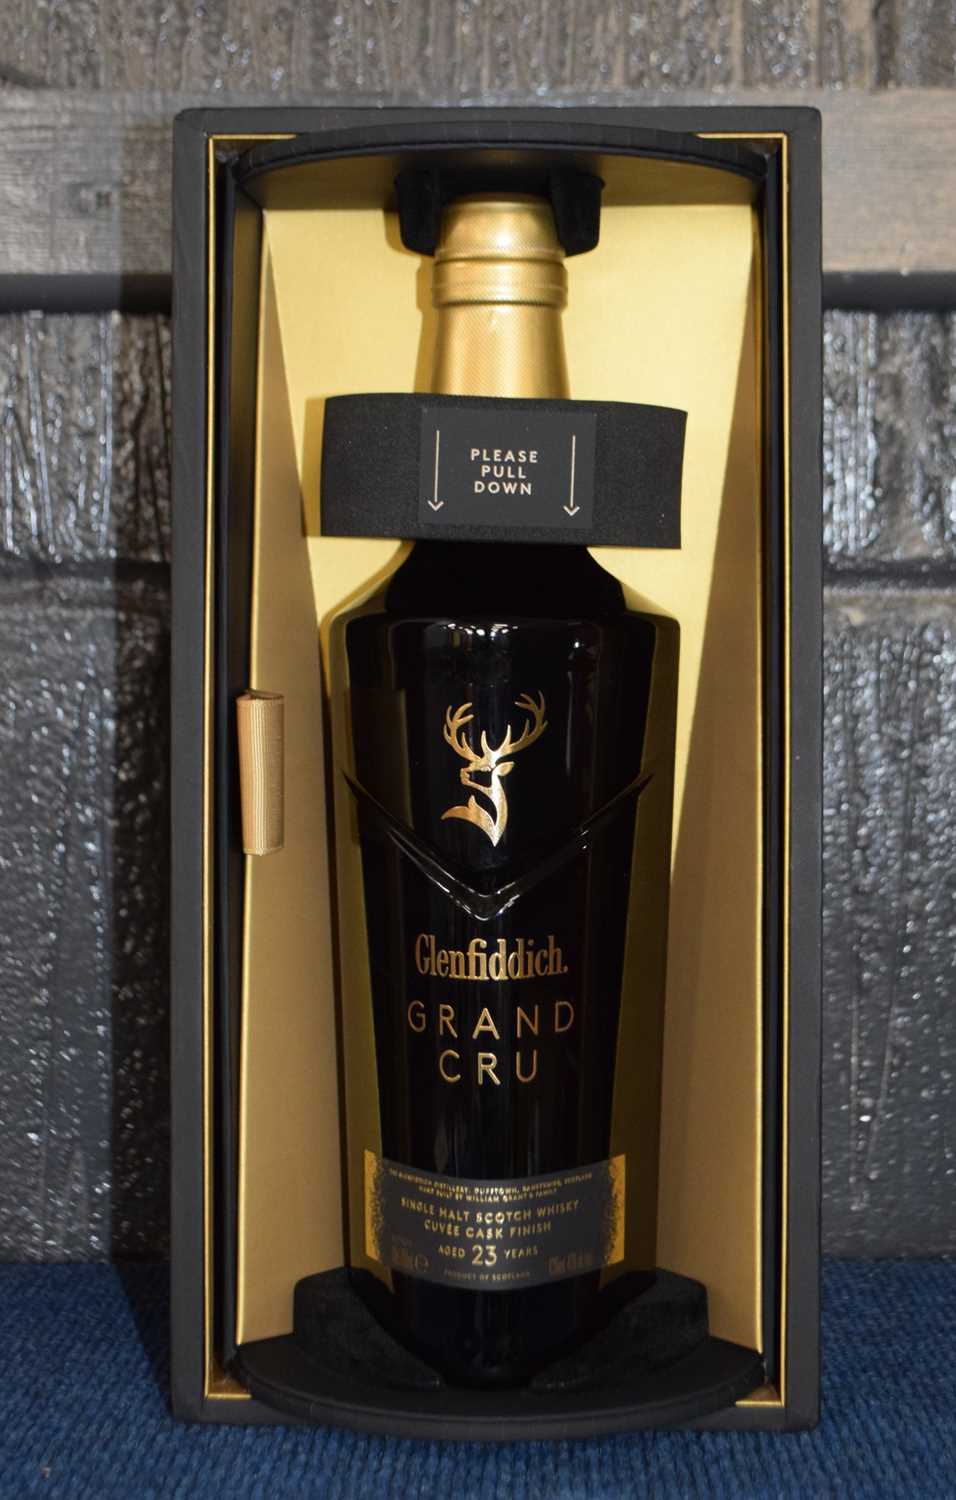 Glenfiddich Grand Cru, 23 Year Old, 70cl bottle in presentation case - Image 2 of 2